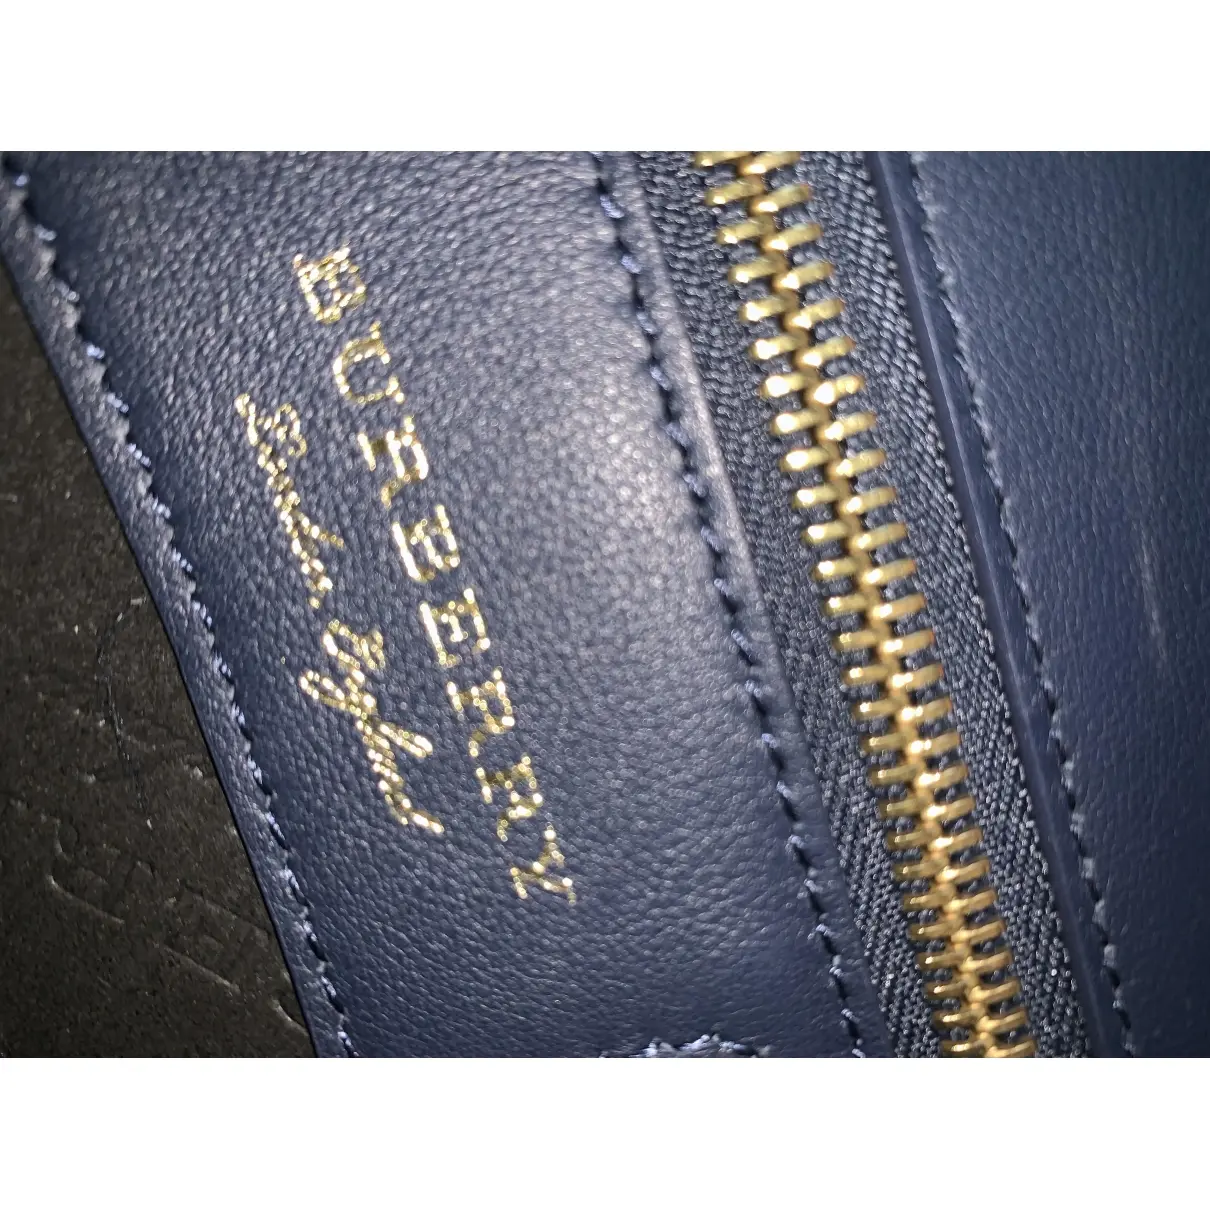 Buy Burberry DK 88 leather handbag online